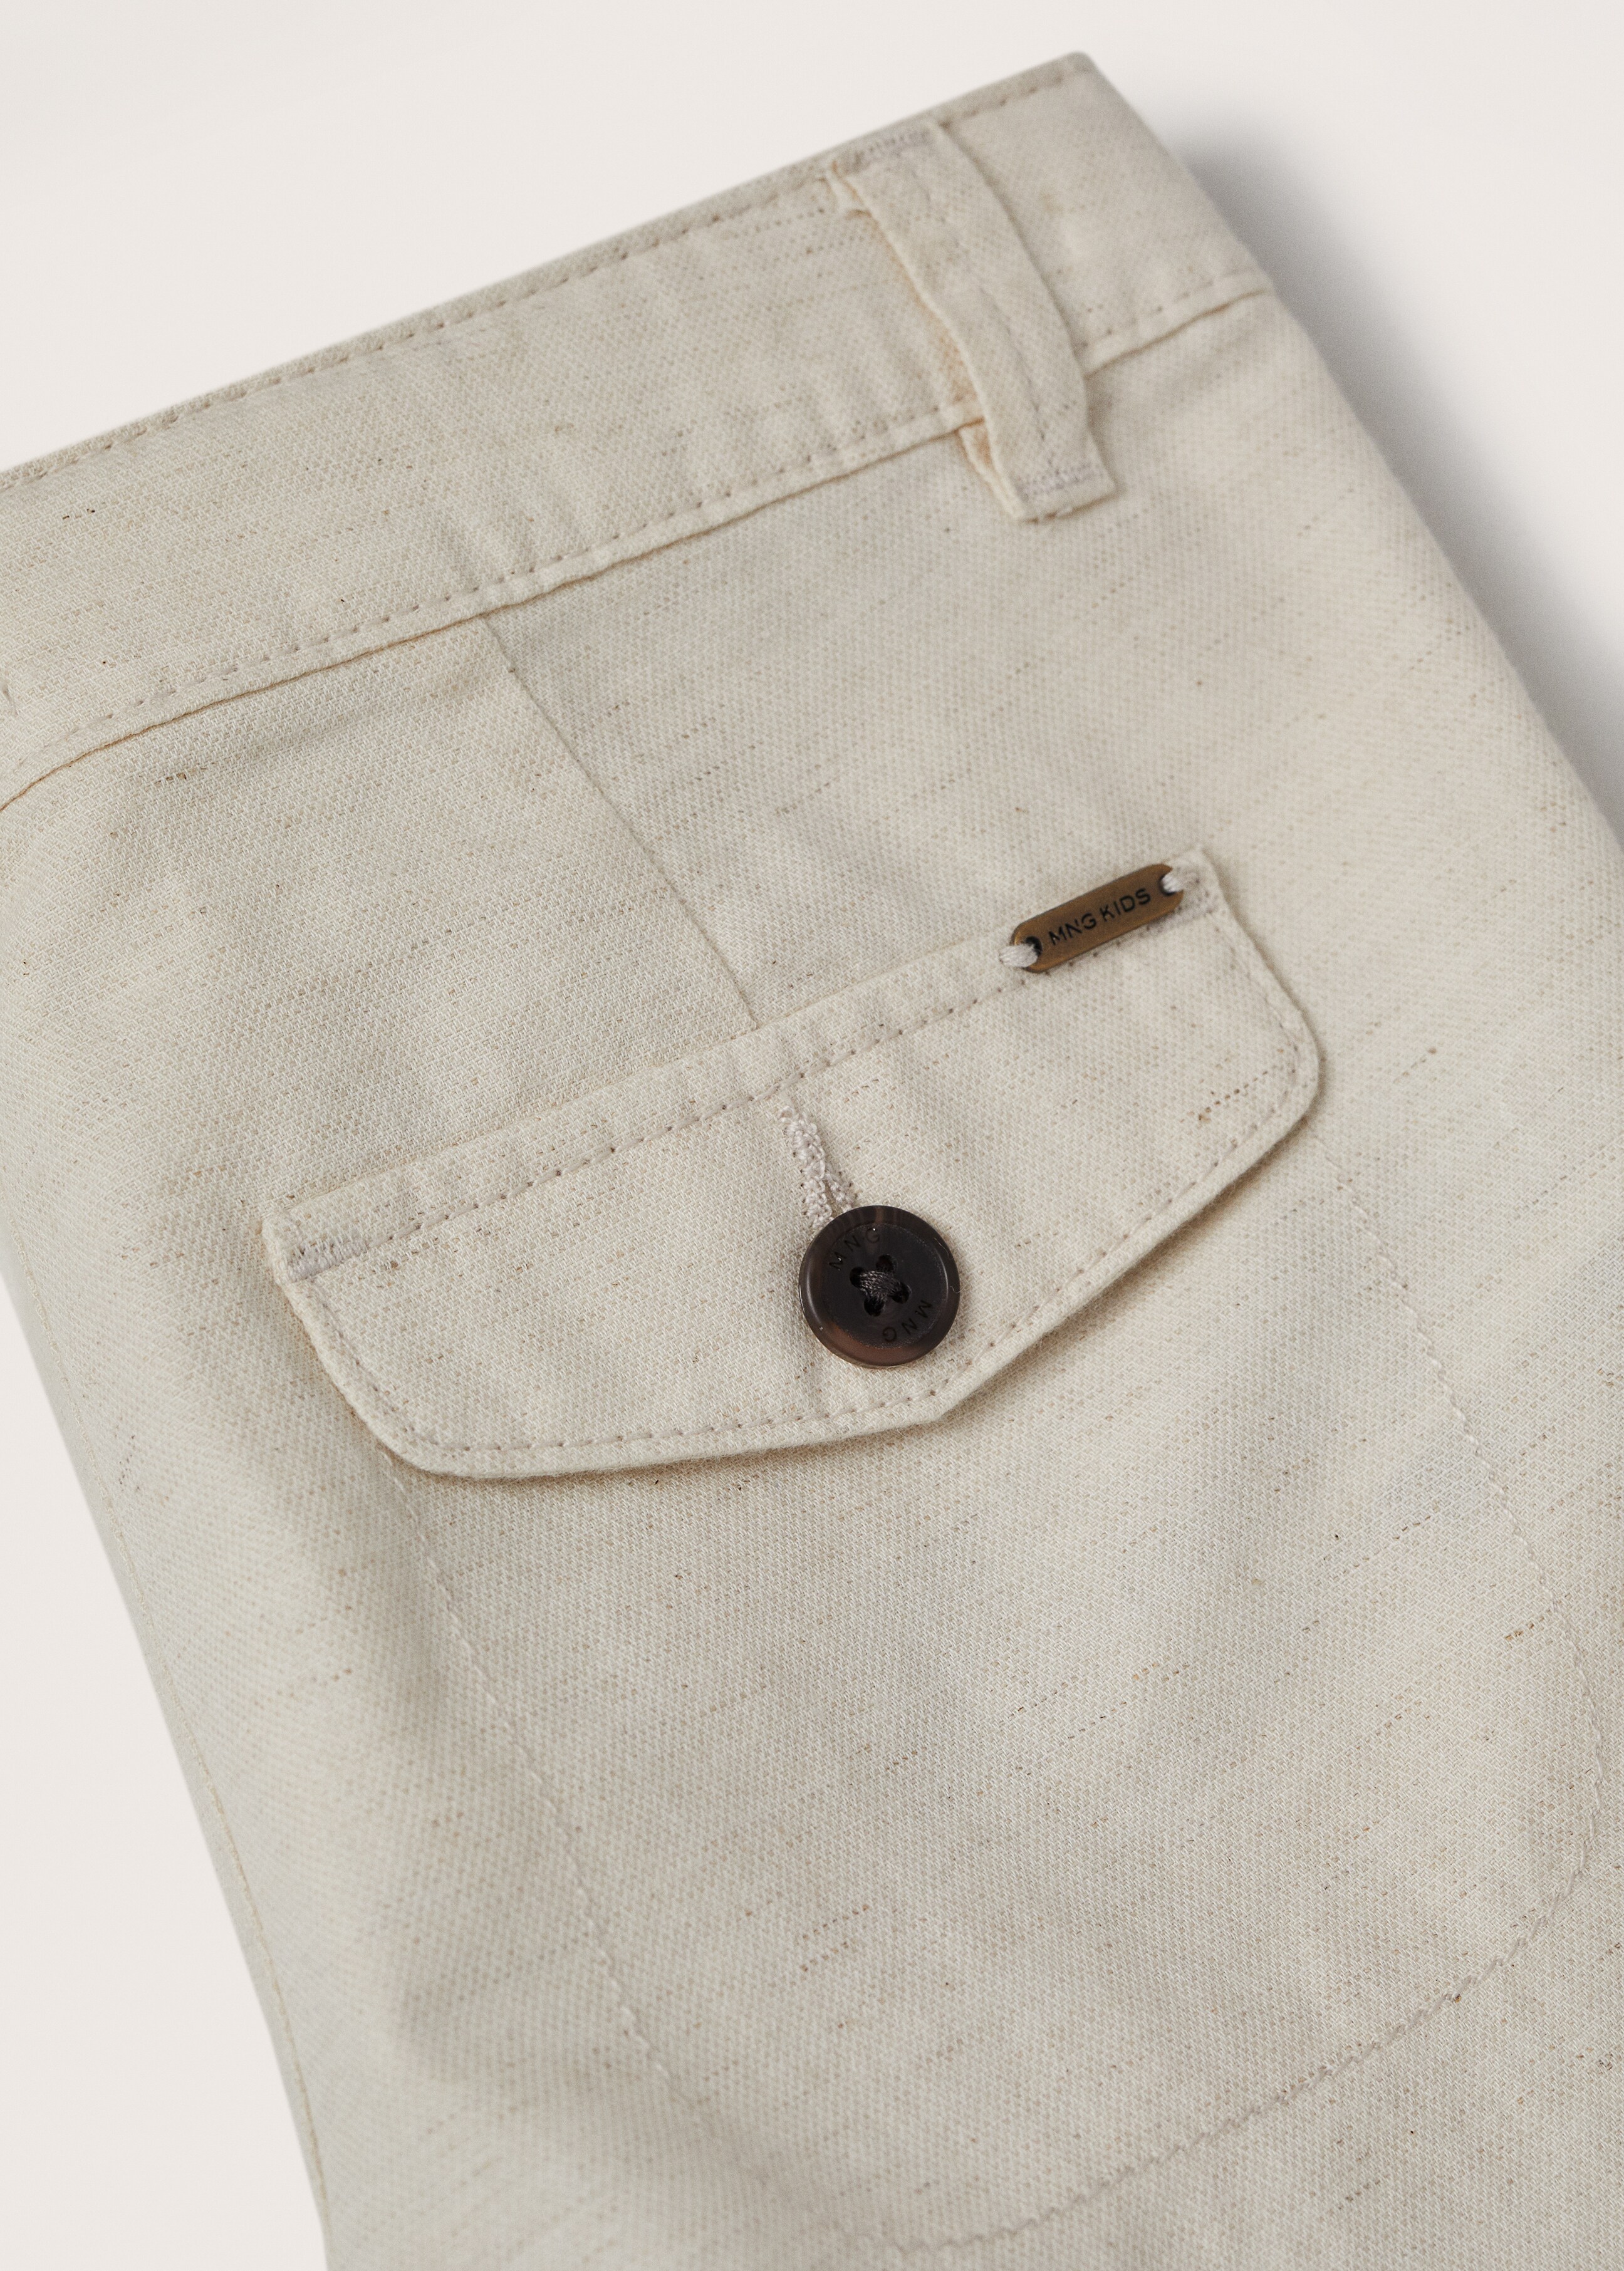 Linen cotton bermuda shorts - Details of the article 8